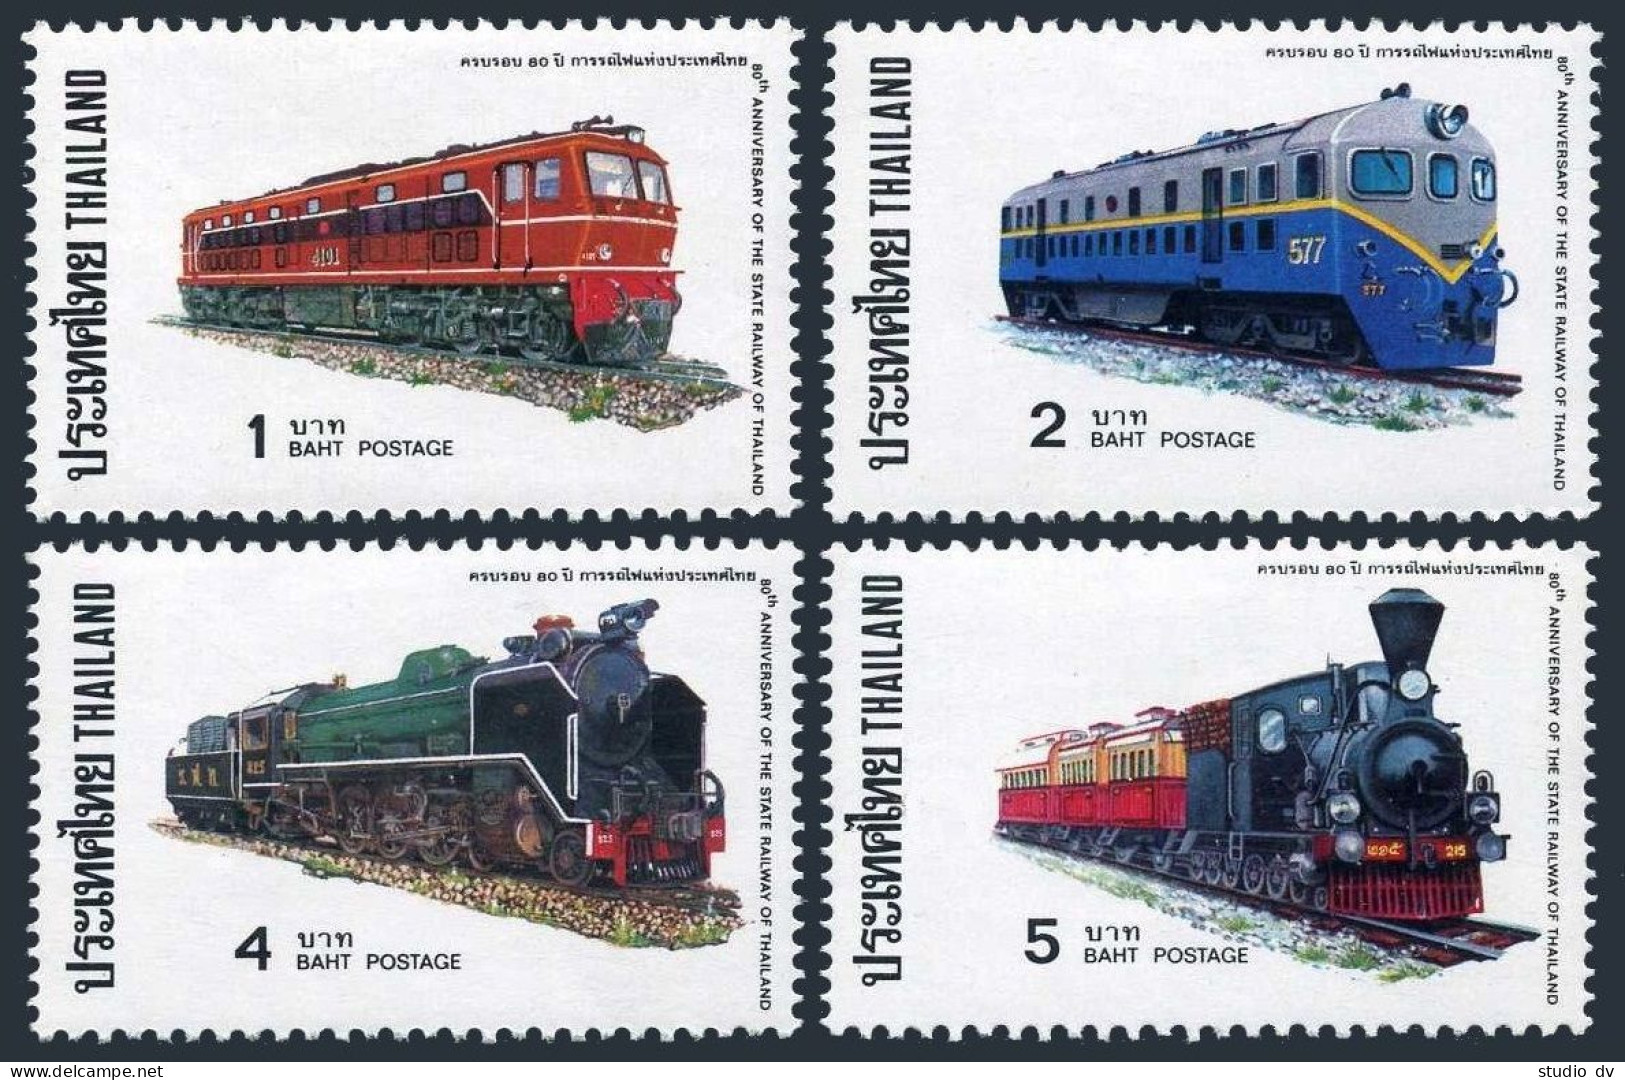 Thailand 811-814, MNH. Mi 832-835. Railroad Of Thailand, 80, 1977. Locomotives. - Thailand